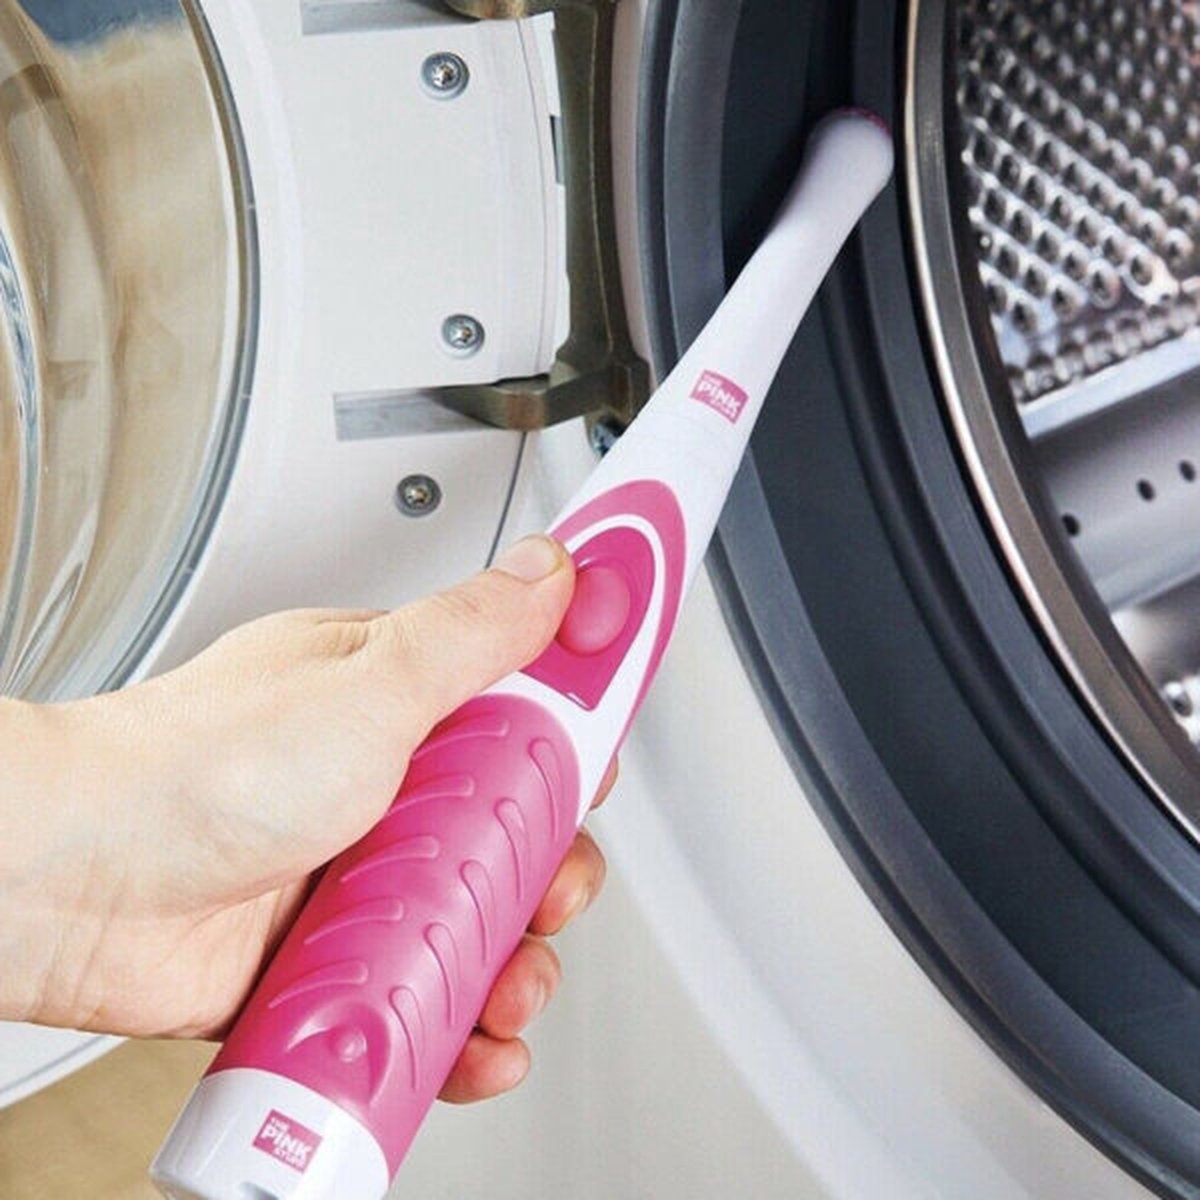 The Pink Stuff The Miracle Cleaning Paste Kit - Le kit de démarrage ultime  pour The